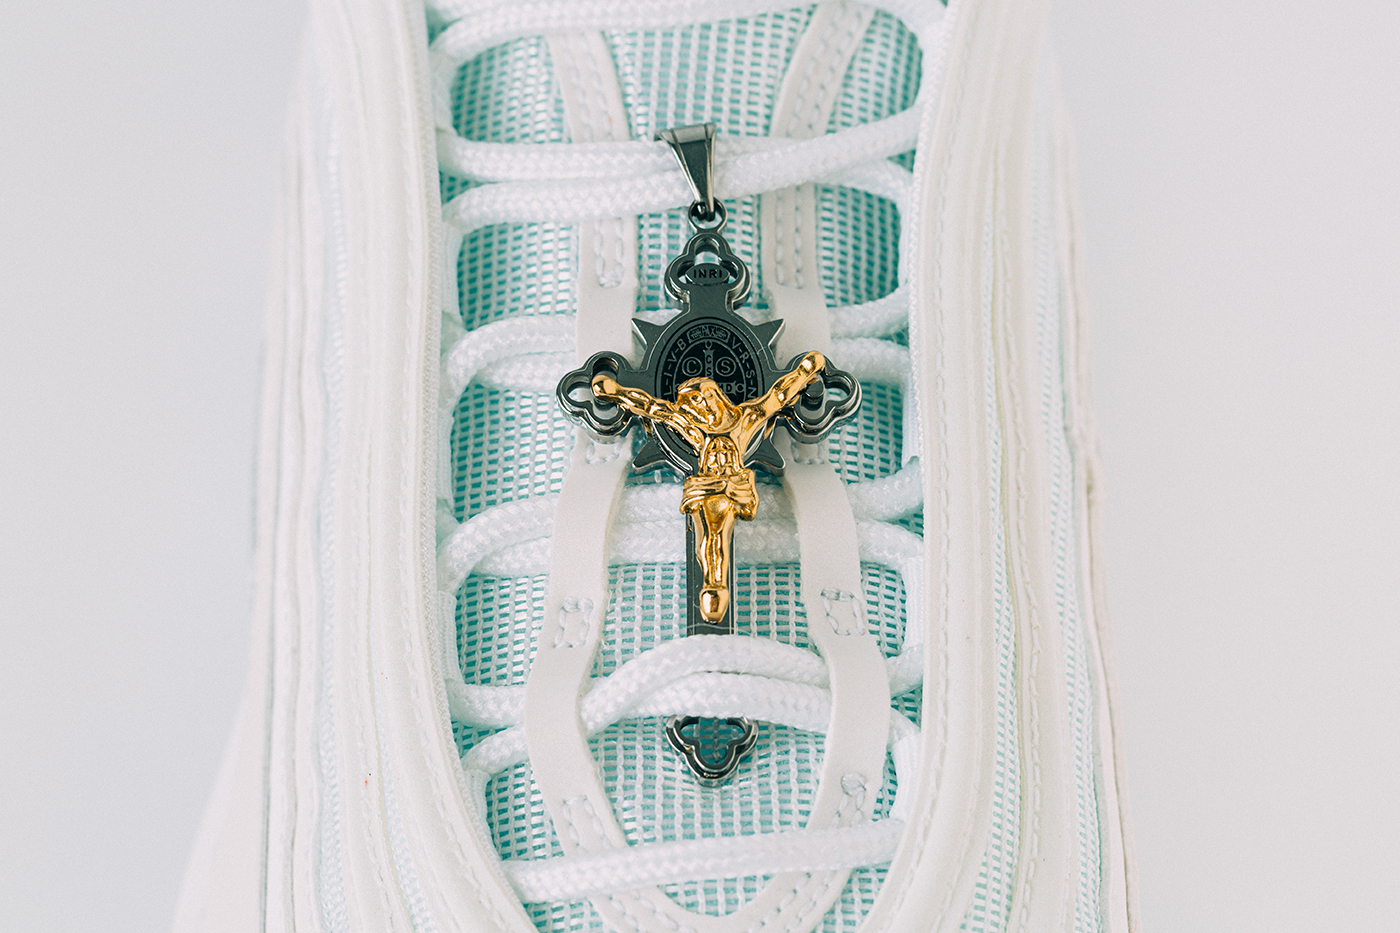 Nike Air Max 97 x MSCHF x INRI “Jesus Shoes” (2019) - Size 10.5